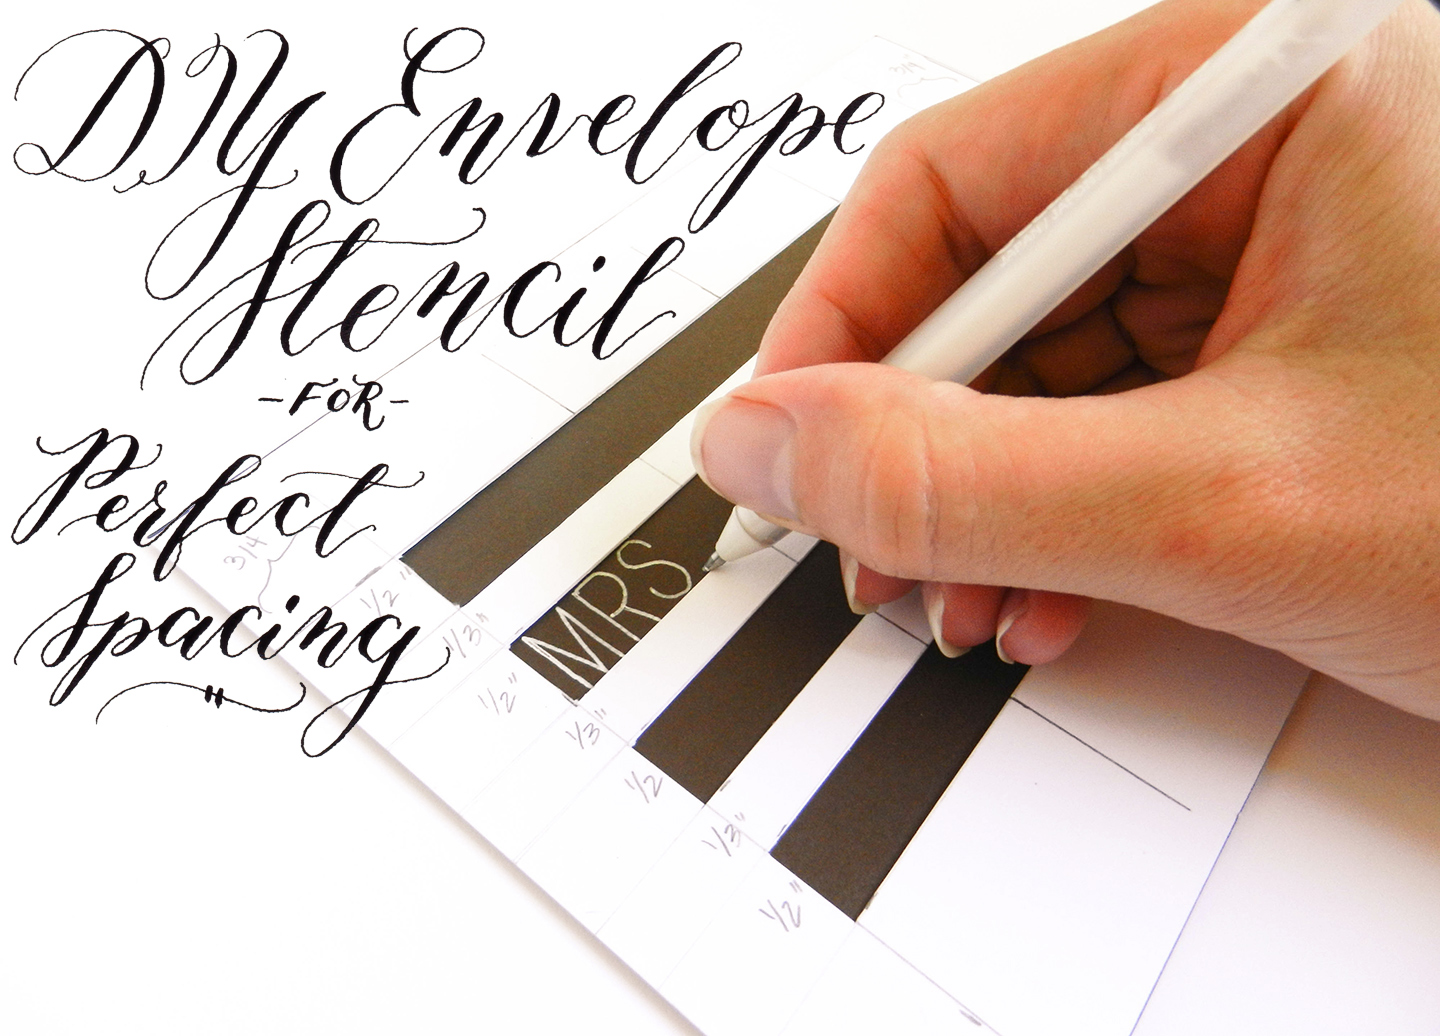 DIY Envelope Stencil for Perfect Spacing